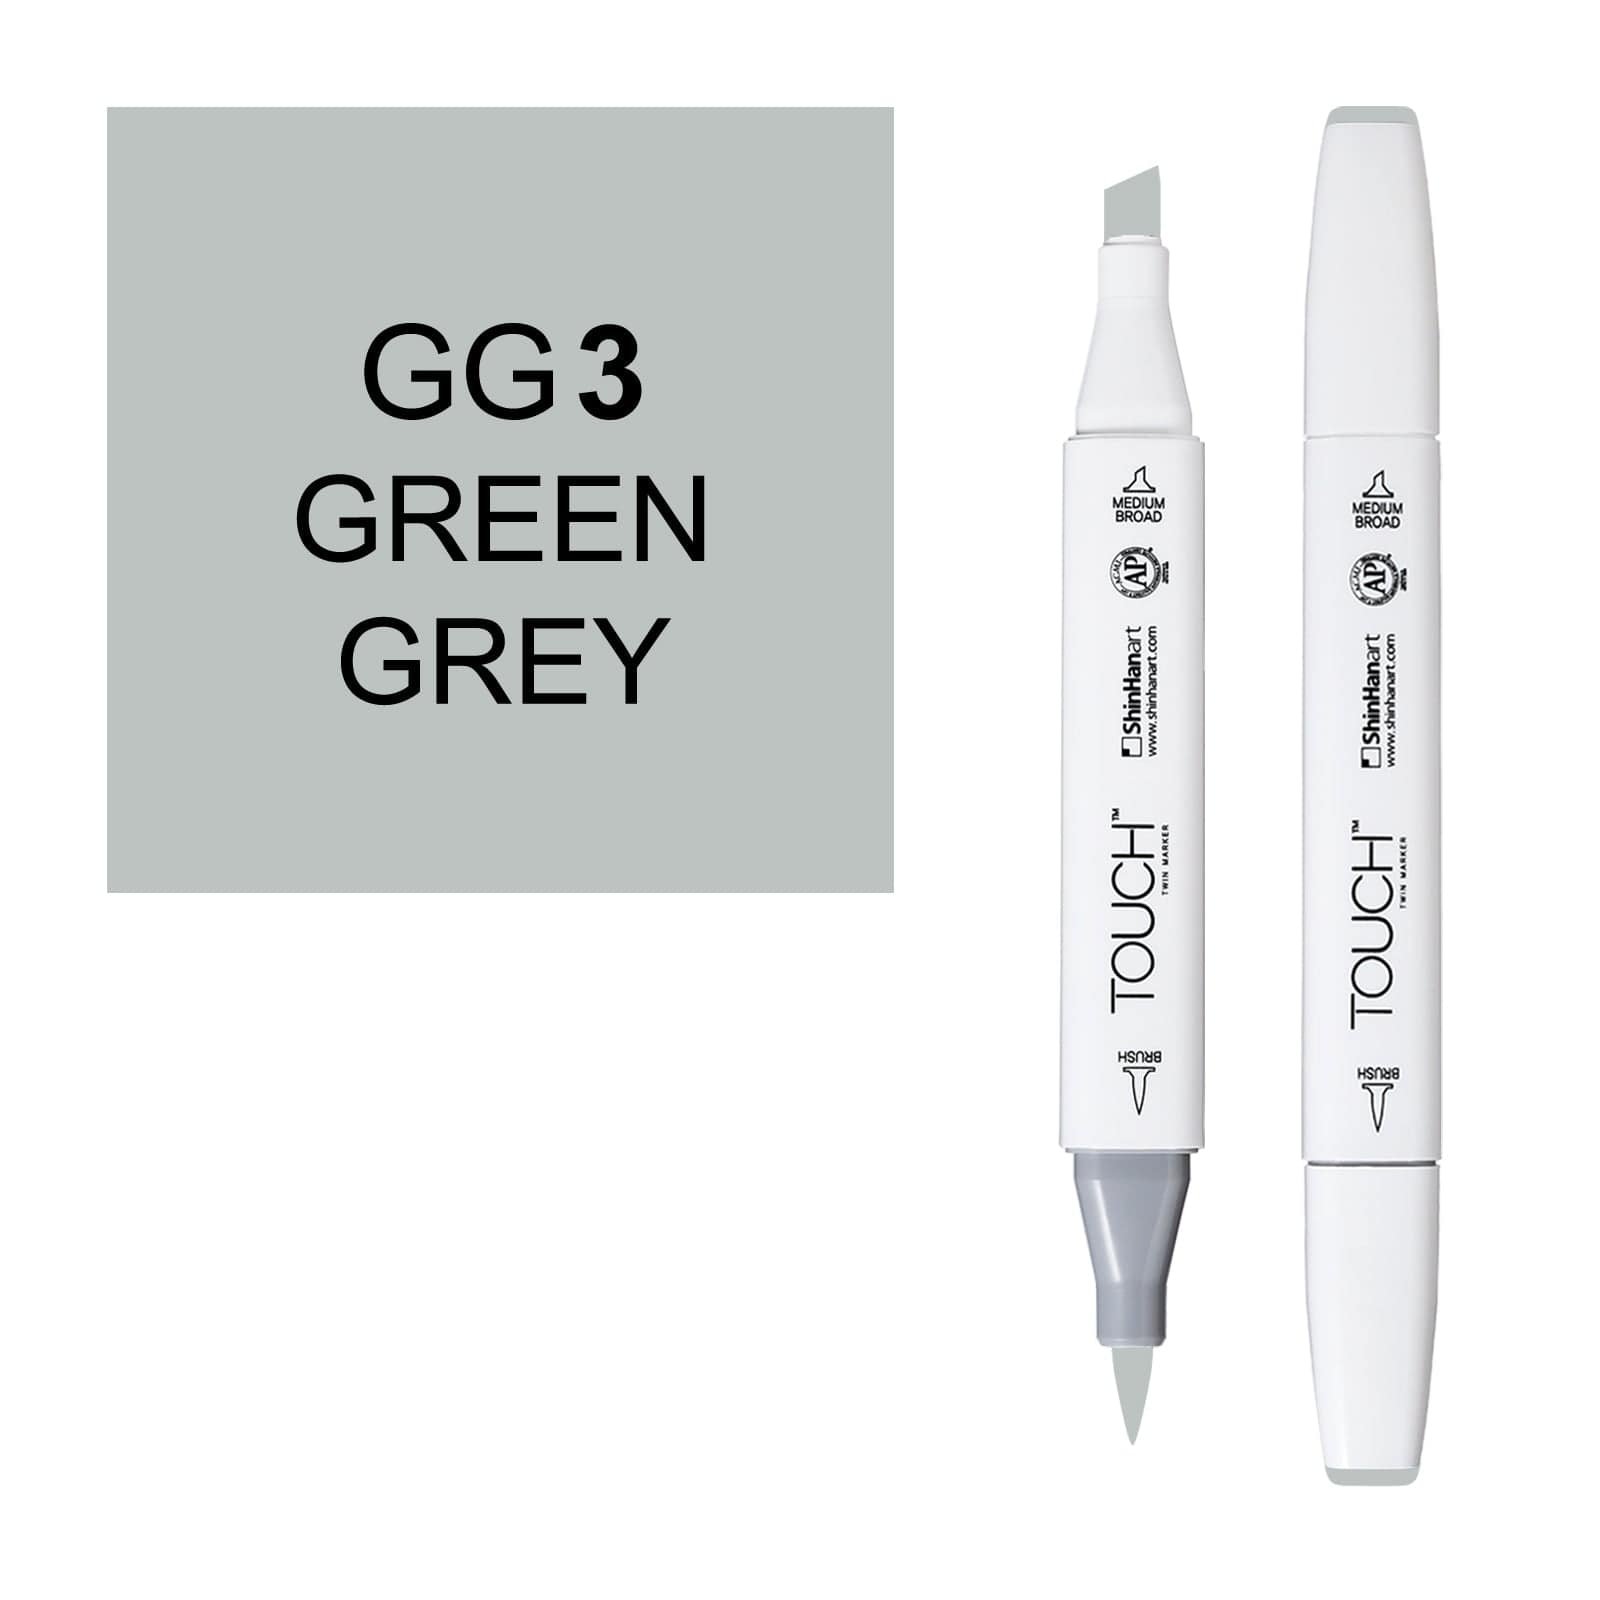 ShinHanart Touch Twin Brush Markers 3 green grey